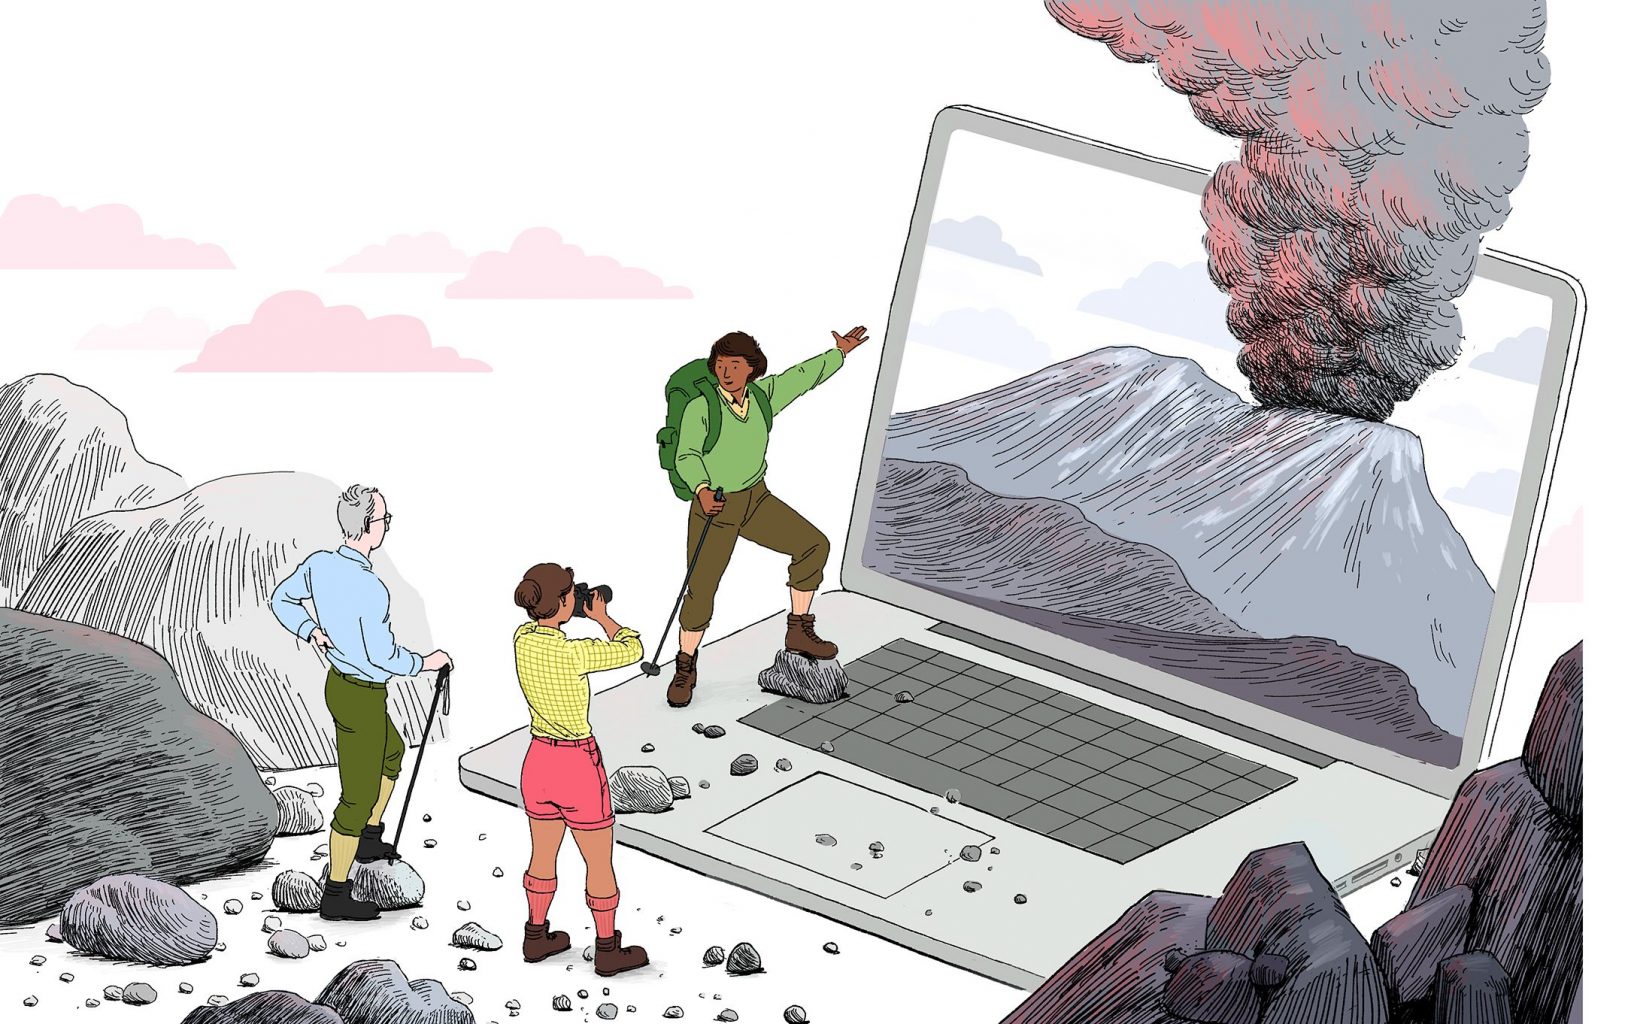 laptop showing volcano